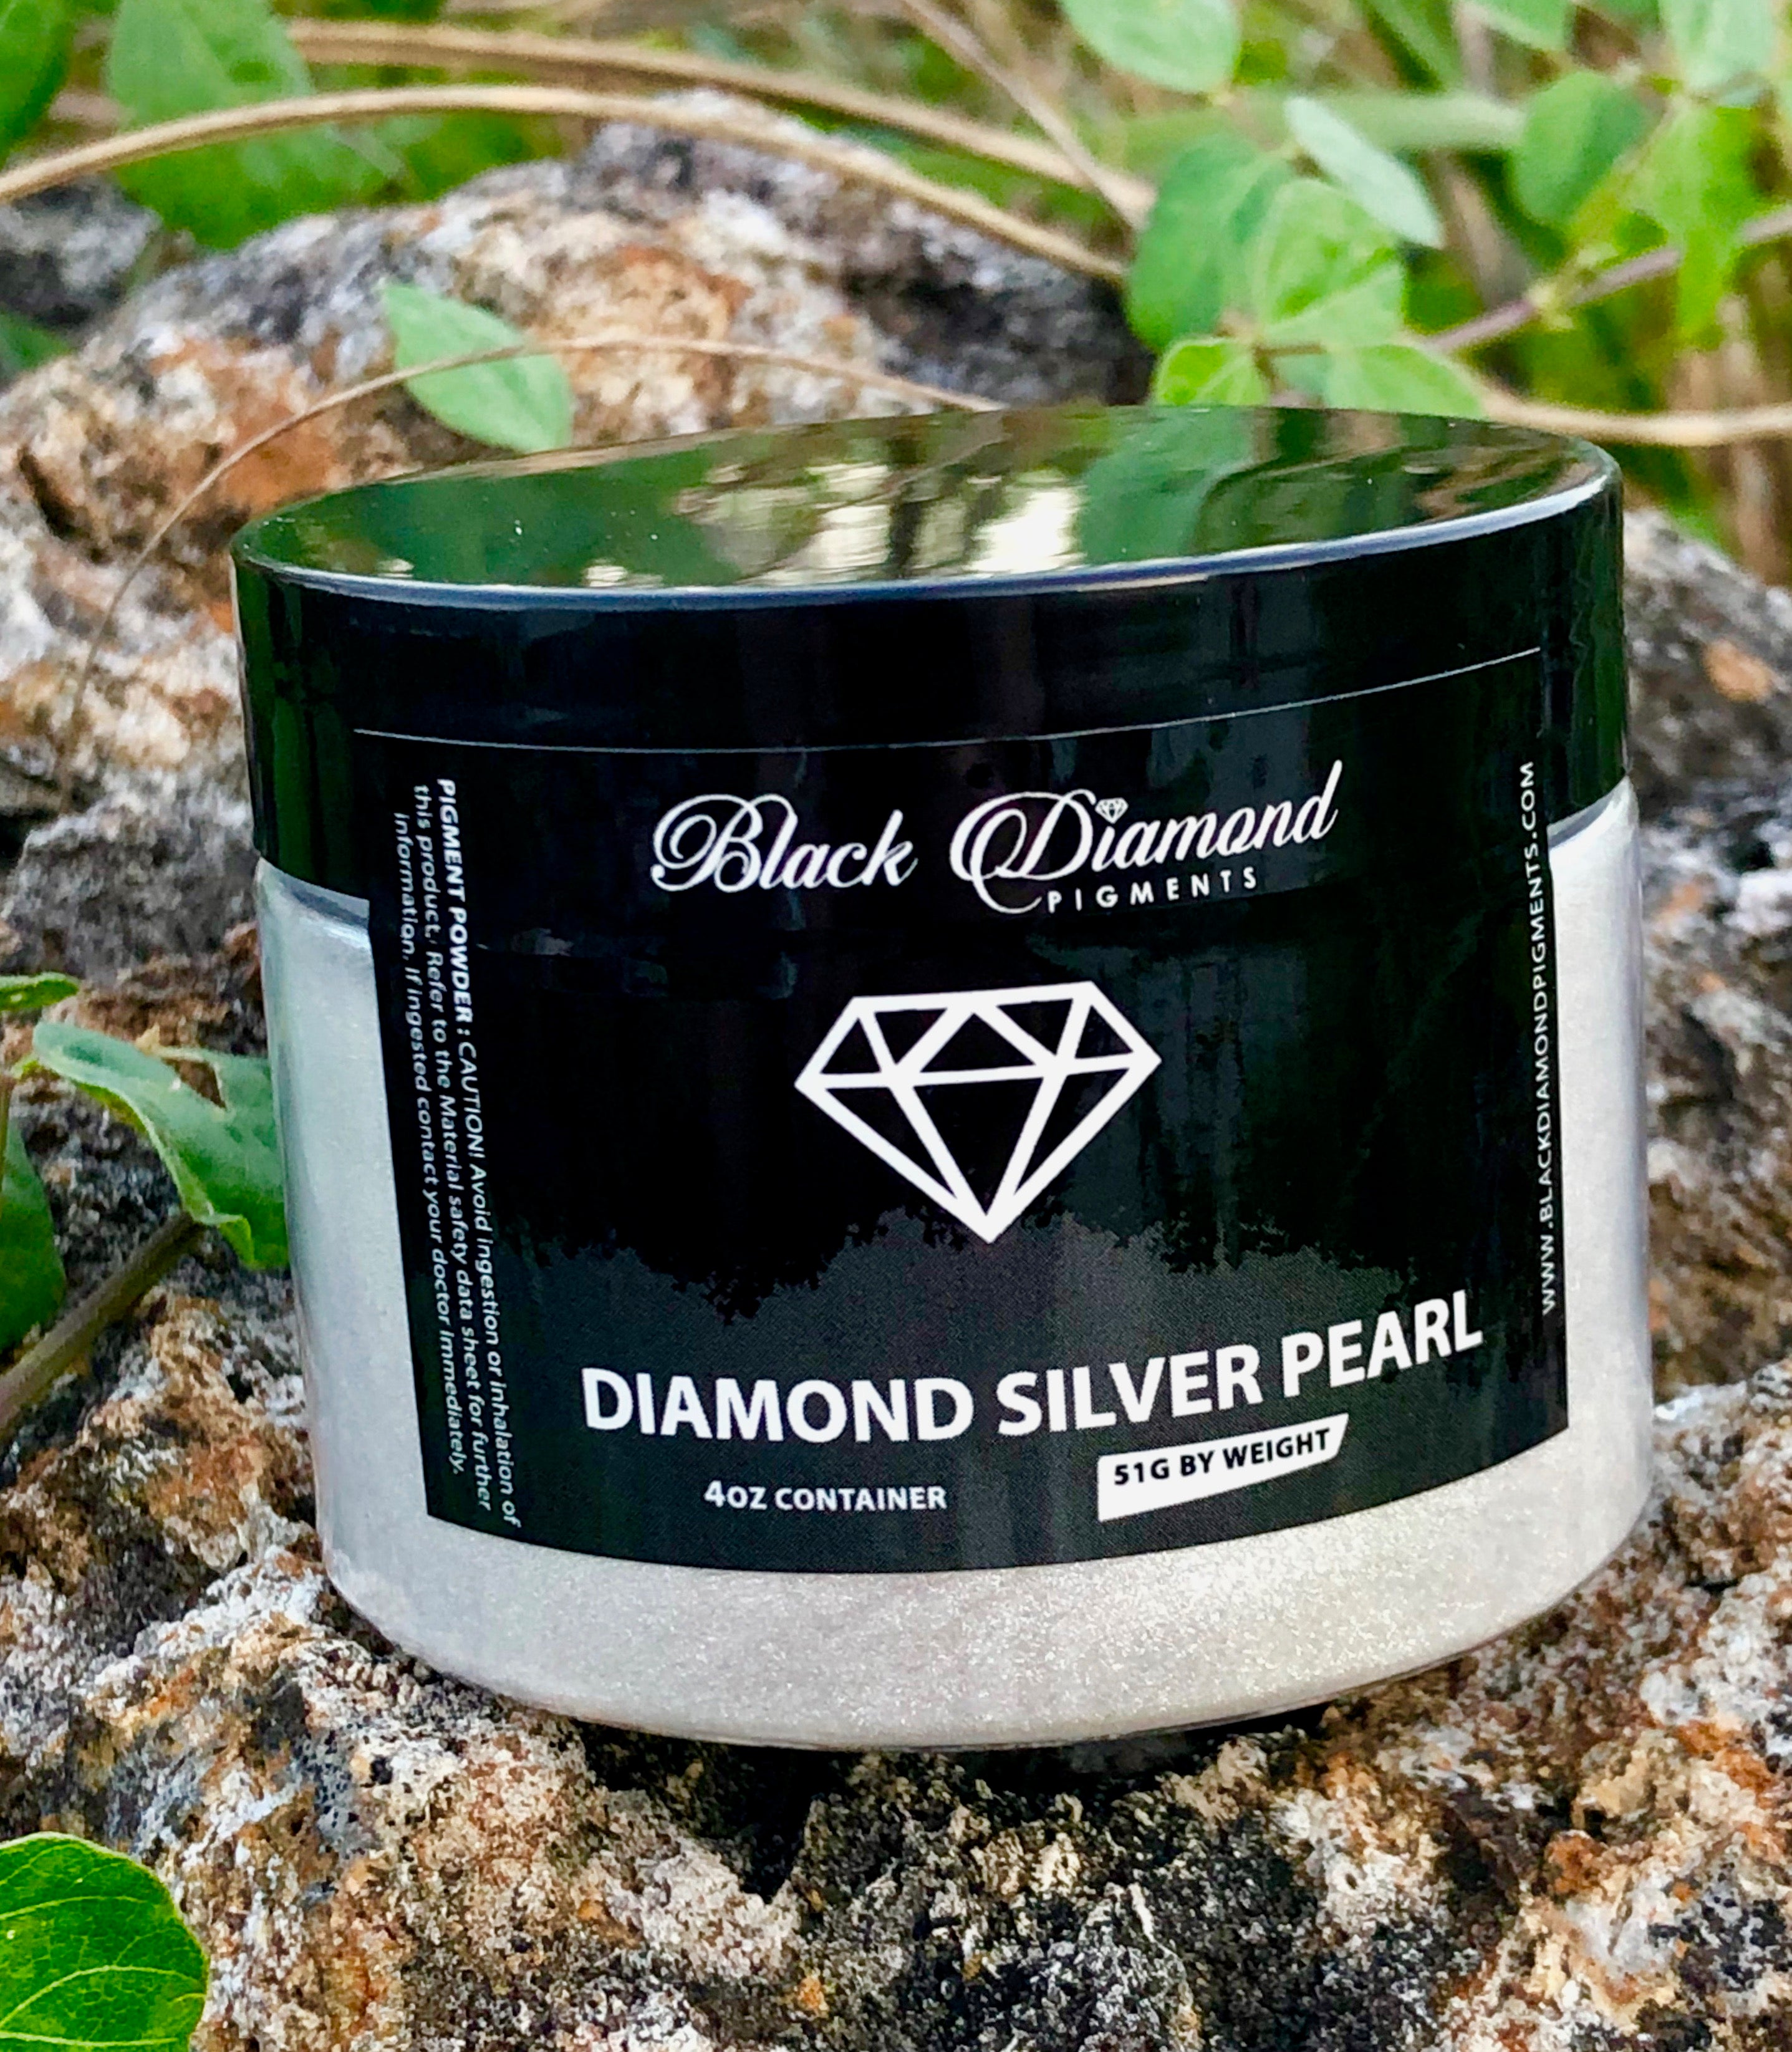 "DIAMOND SILVER PEARL" Black Diamond Pigments